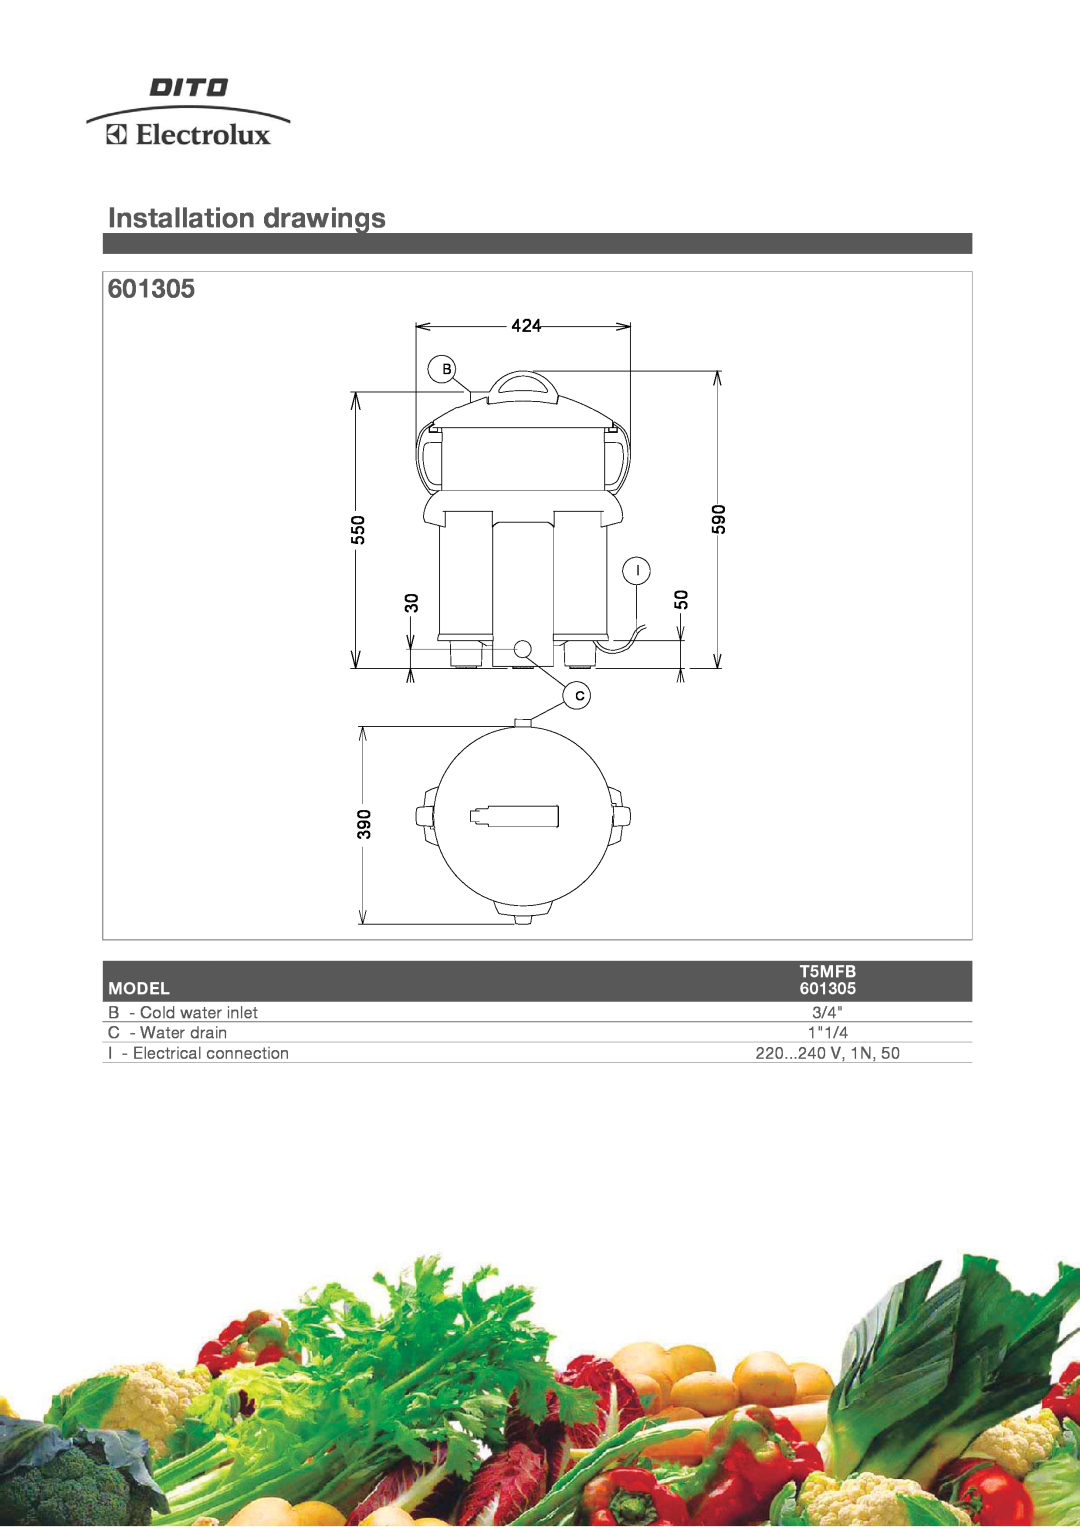 Electrolux T5MFB manual Installation drawings, 601305, Model 